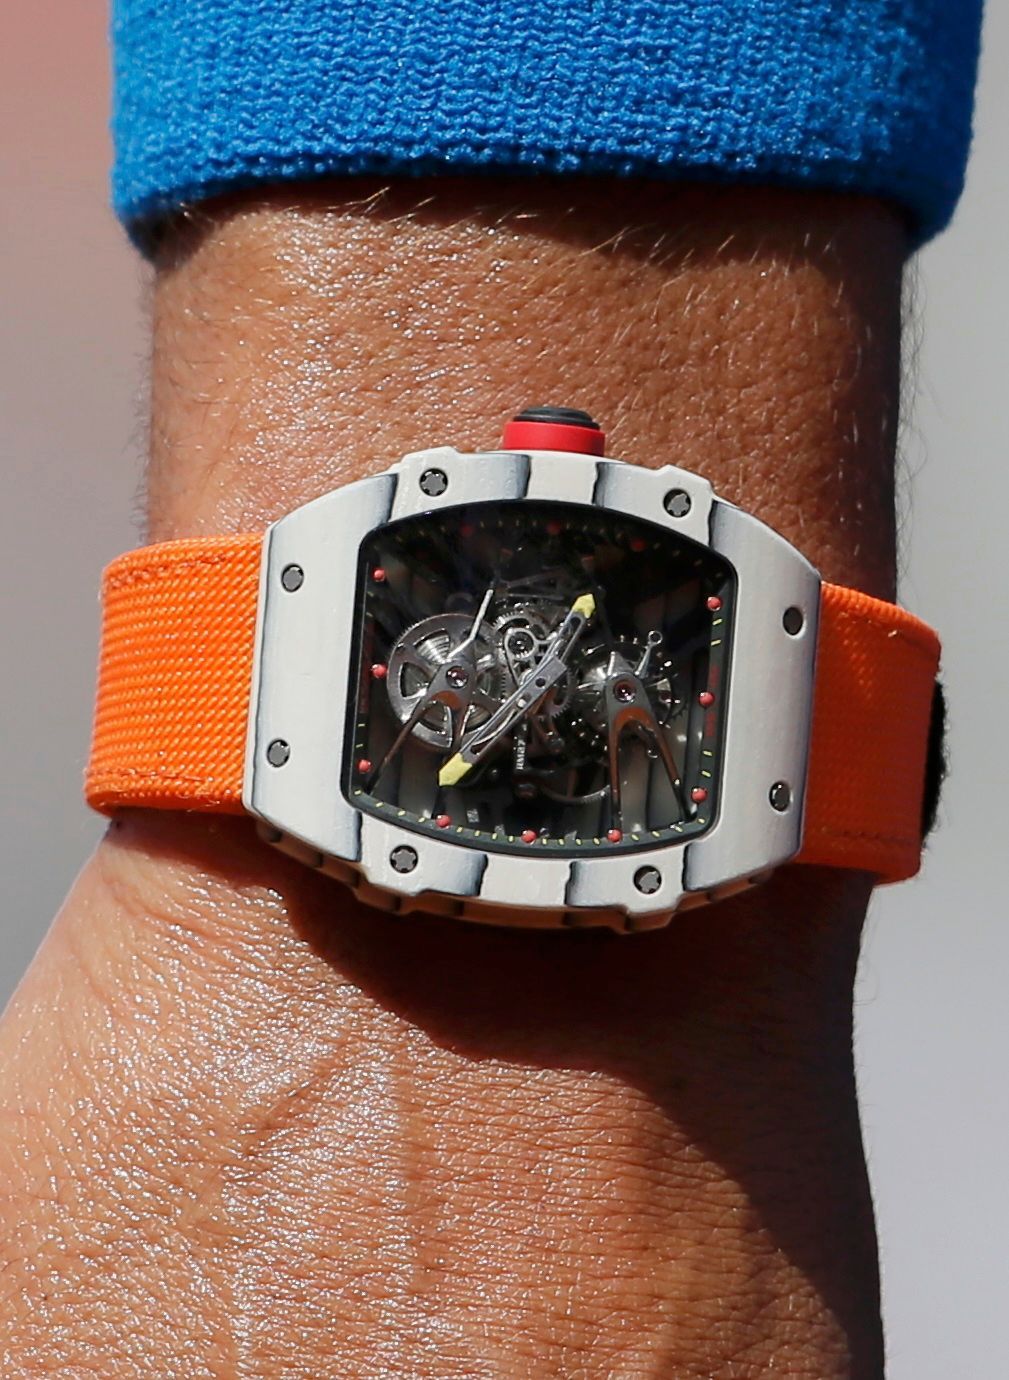 French Open 2015: Rafael Nadal - hodinky RM 27-02 Tourbillon značky Richard Mille